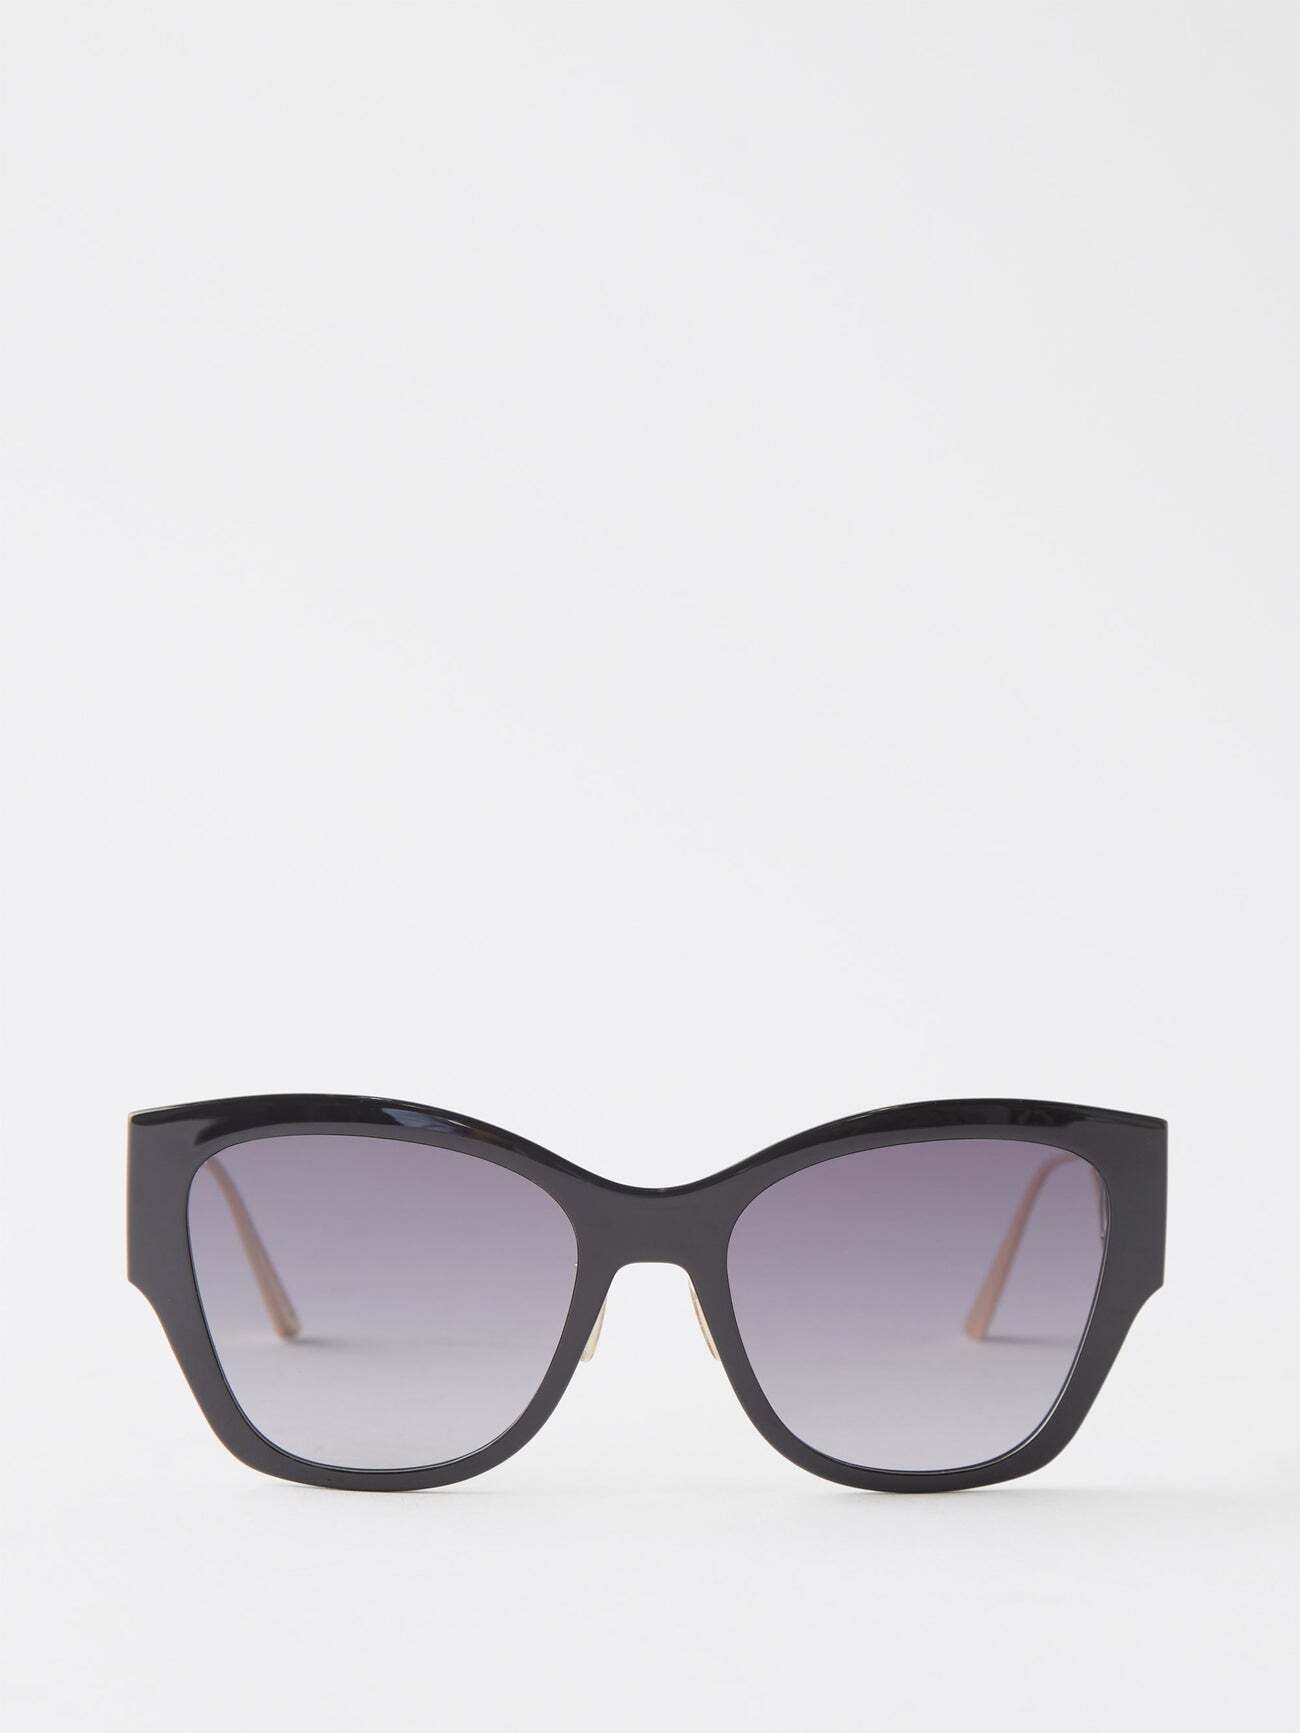 Dior - 30montaigne B2u Butterfly Acetate Sunglasses - Womens - Black